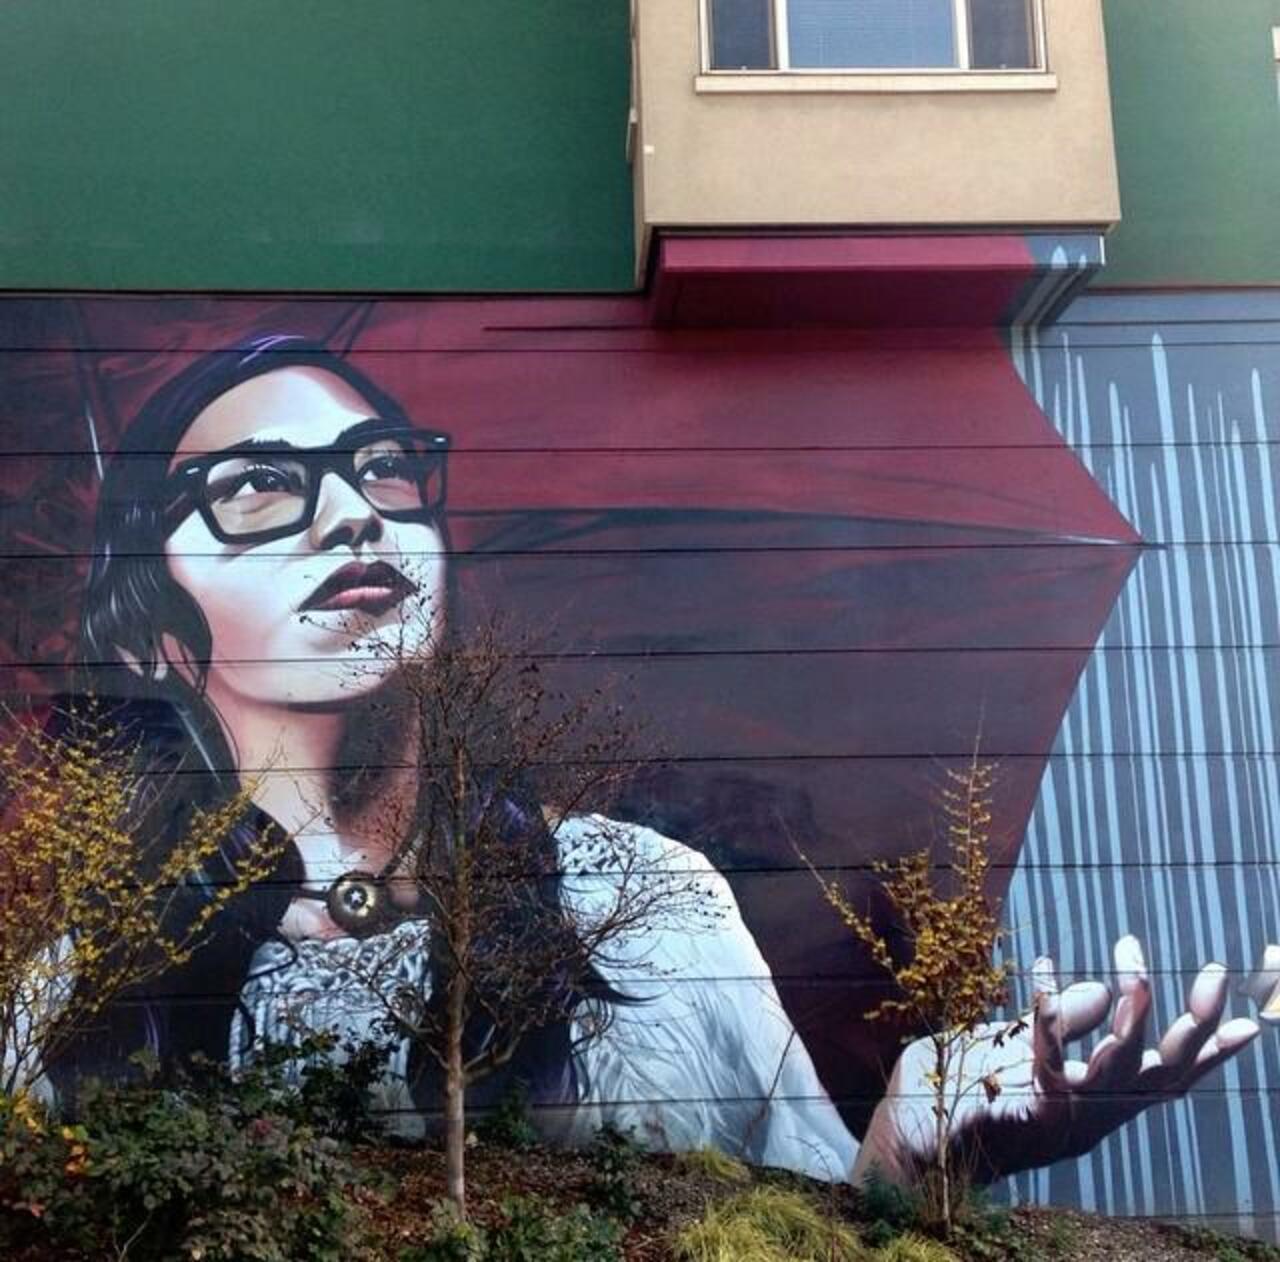 Artist Eras MFK Street Art piece in Capitol Hill, Seattle

#art #mural #graffiti #streetart http://t.co/XgQ6VtzU83